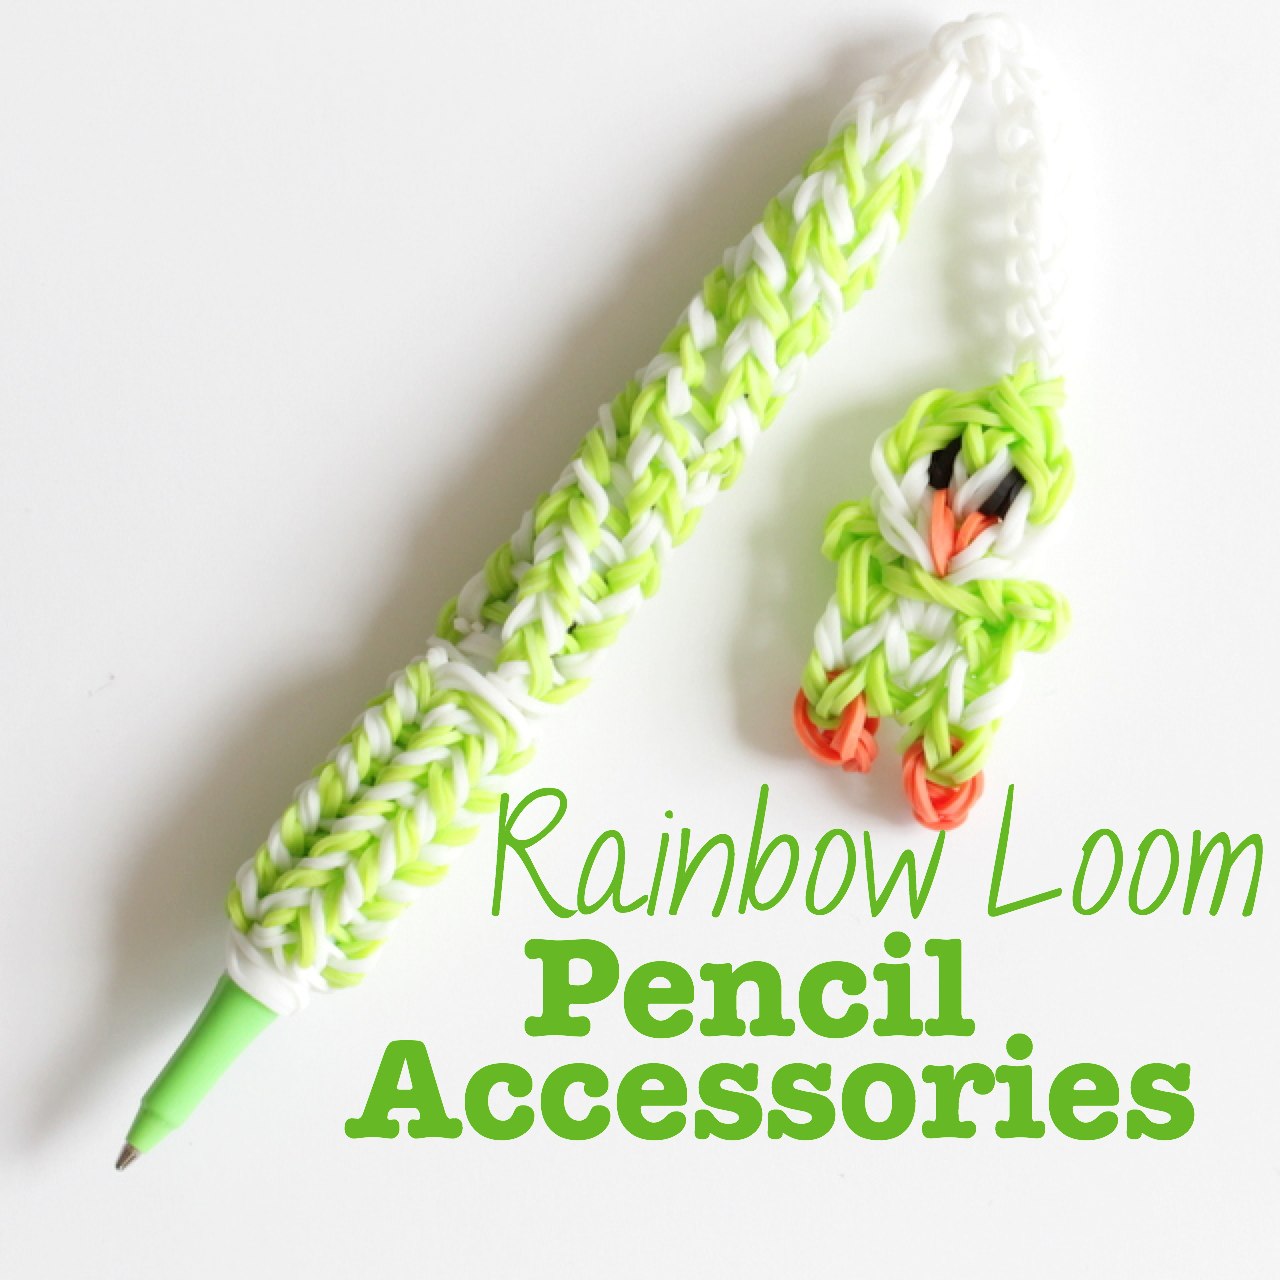 Rainbow Loom: Pen Accessories • The Crafty